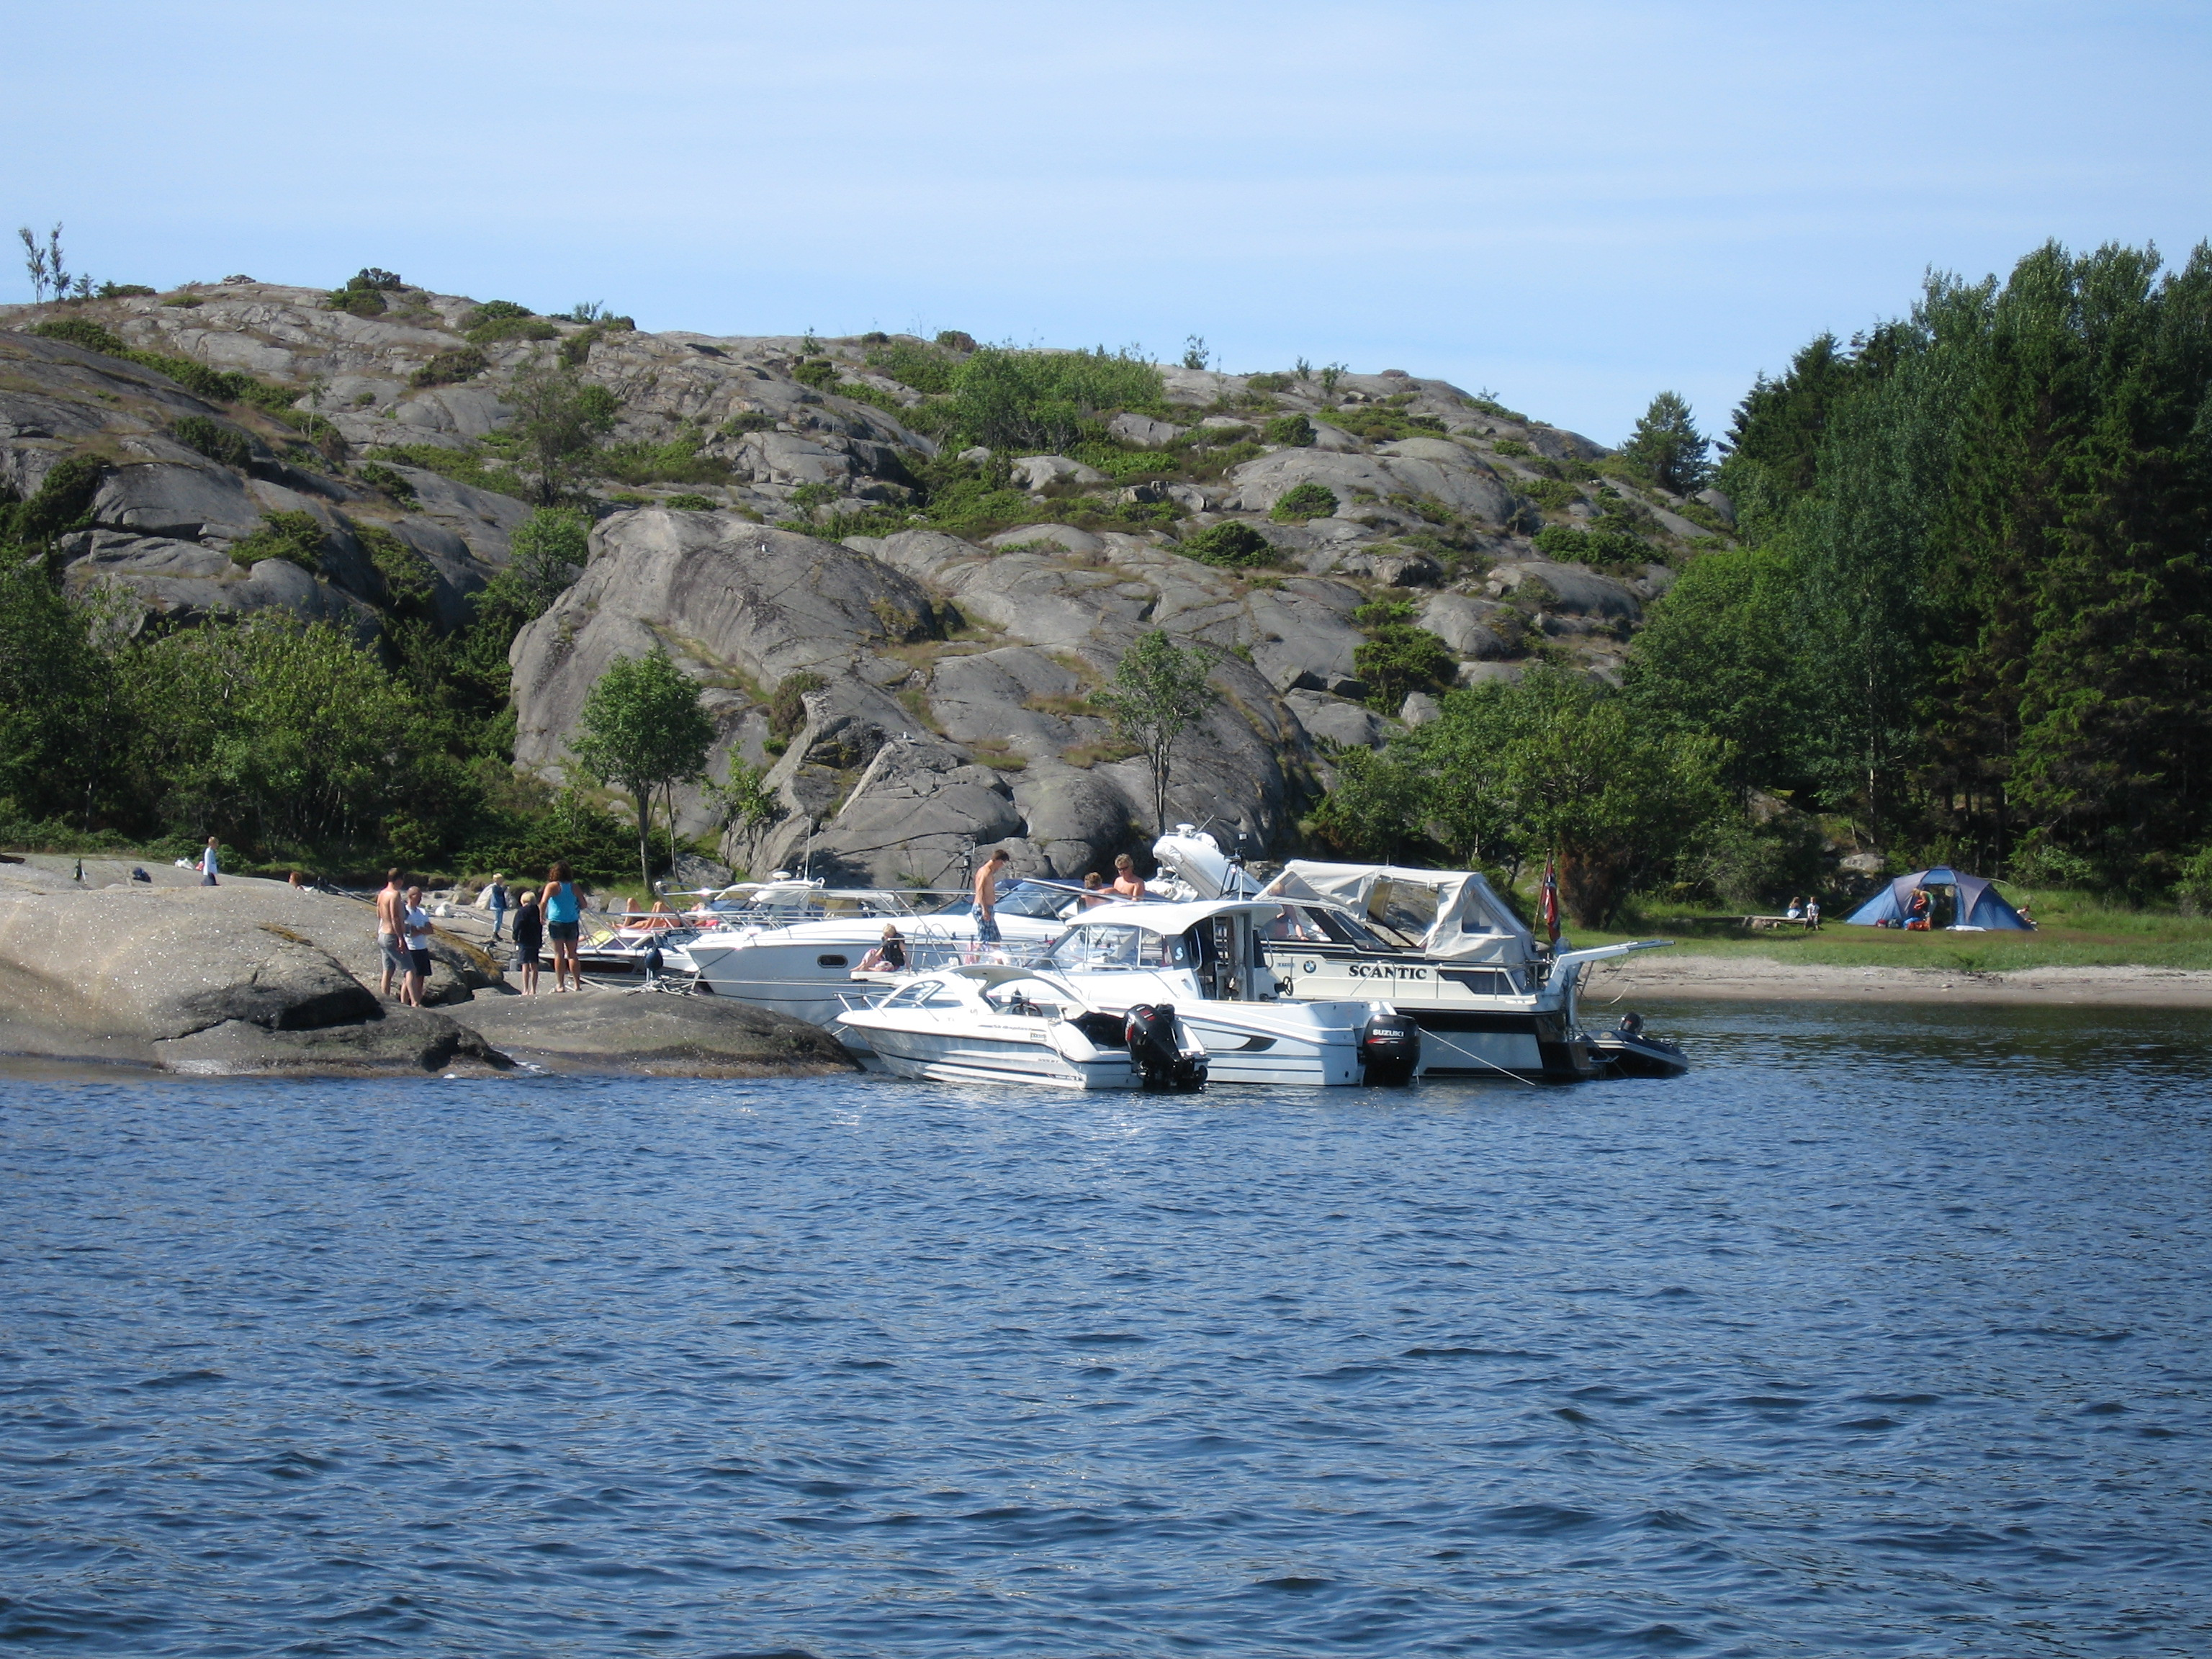 Friluftsbruk Svært populært båtutfartsområde Deler er også